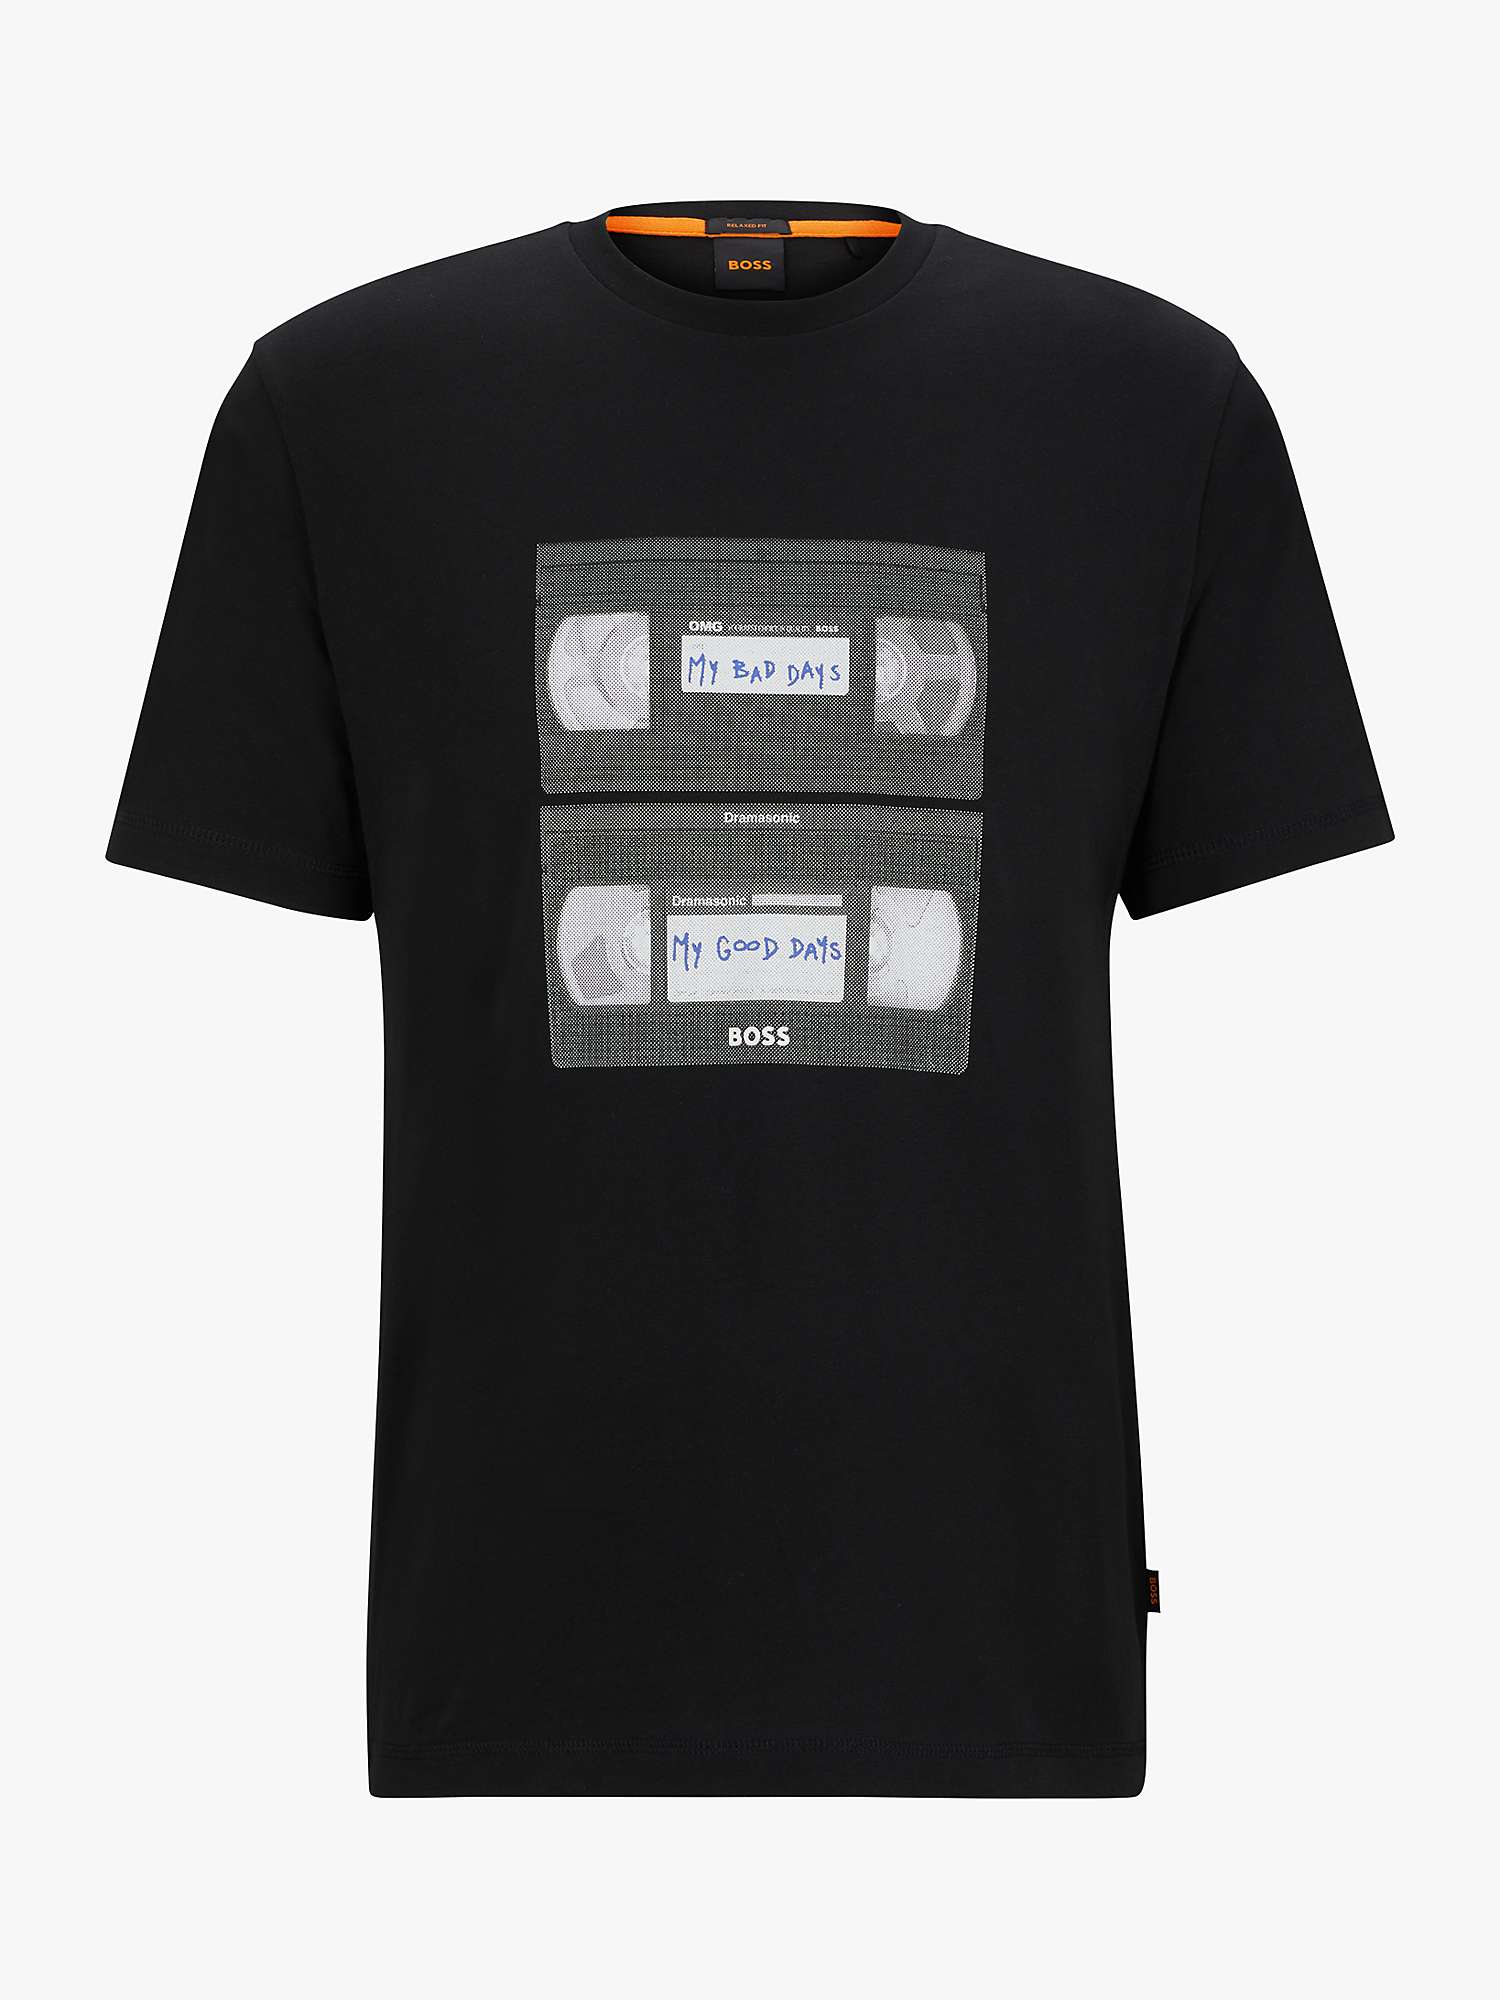 Buy BOSS Retro Leo T-Shirt, Black Online at johnlewis.com